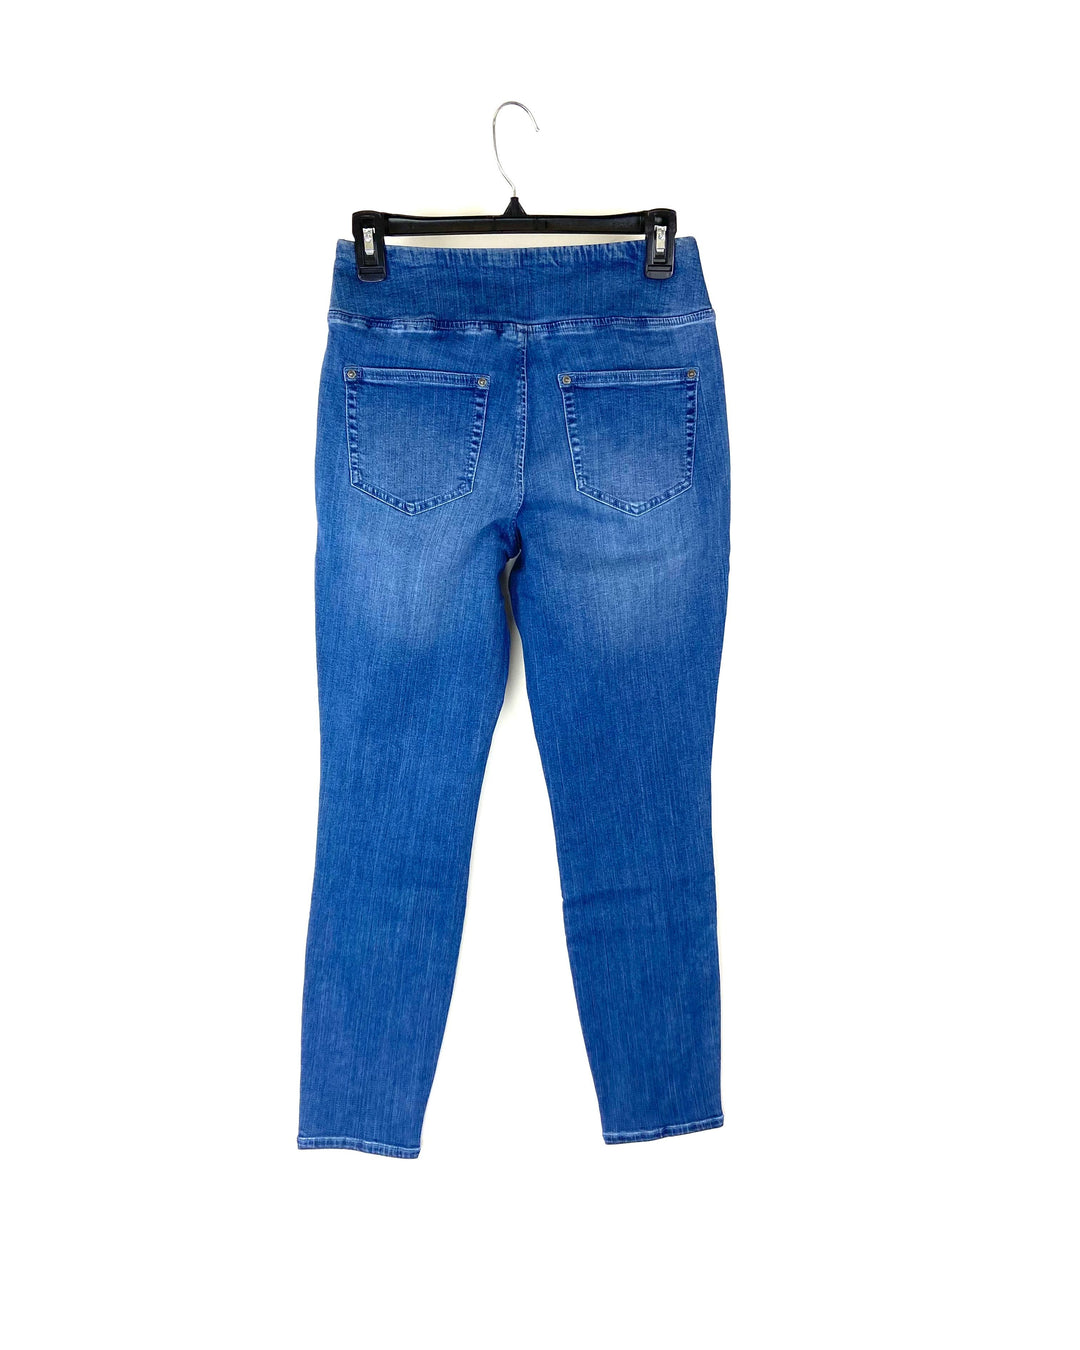 Medium Wash Ruffle Design Jeans - Size 12/14